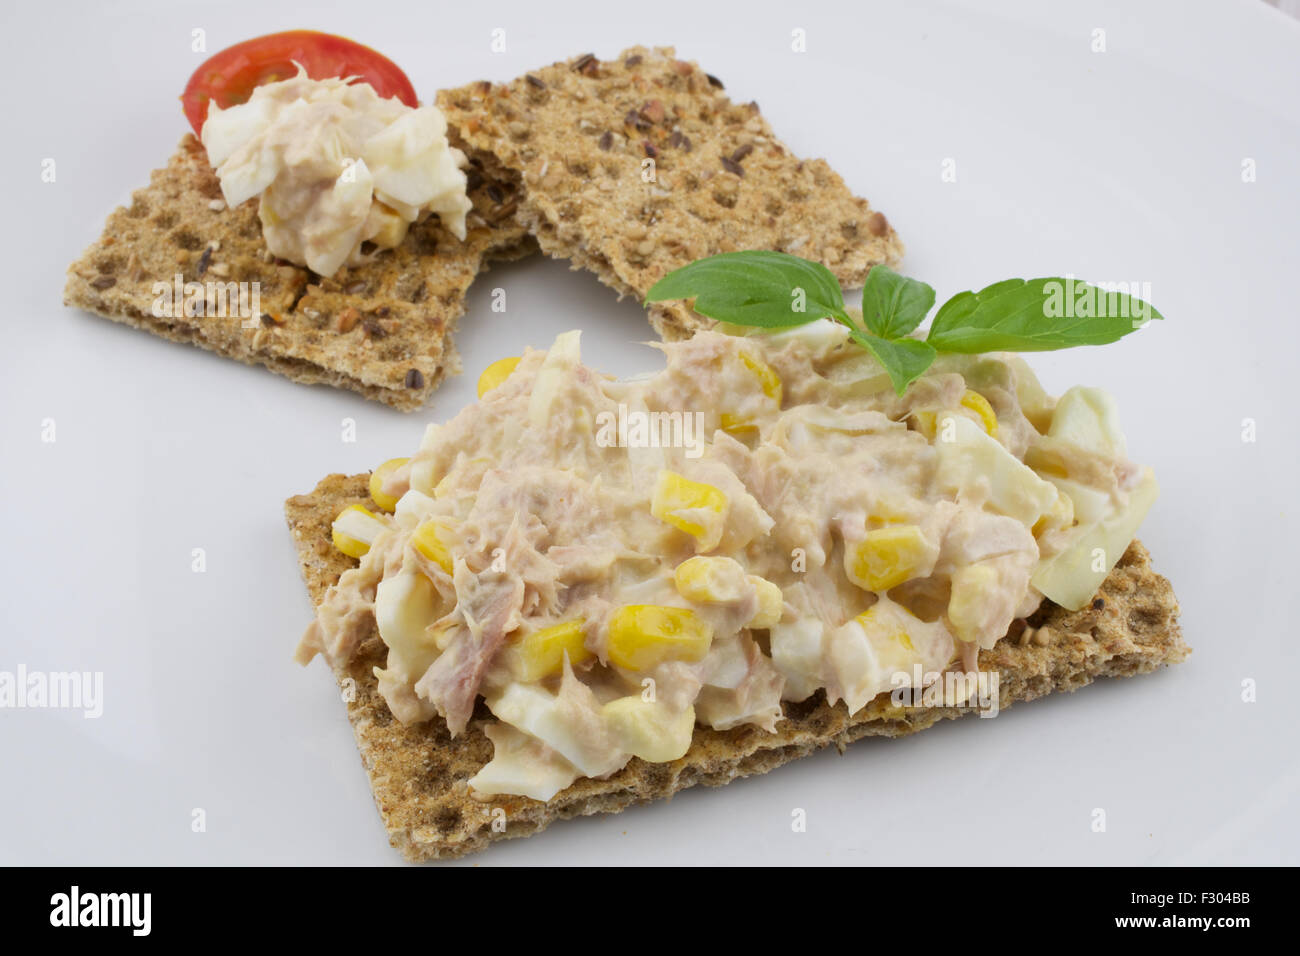 Multigrain crisp bread and tuna salad Stock Photo